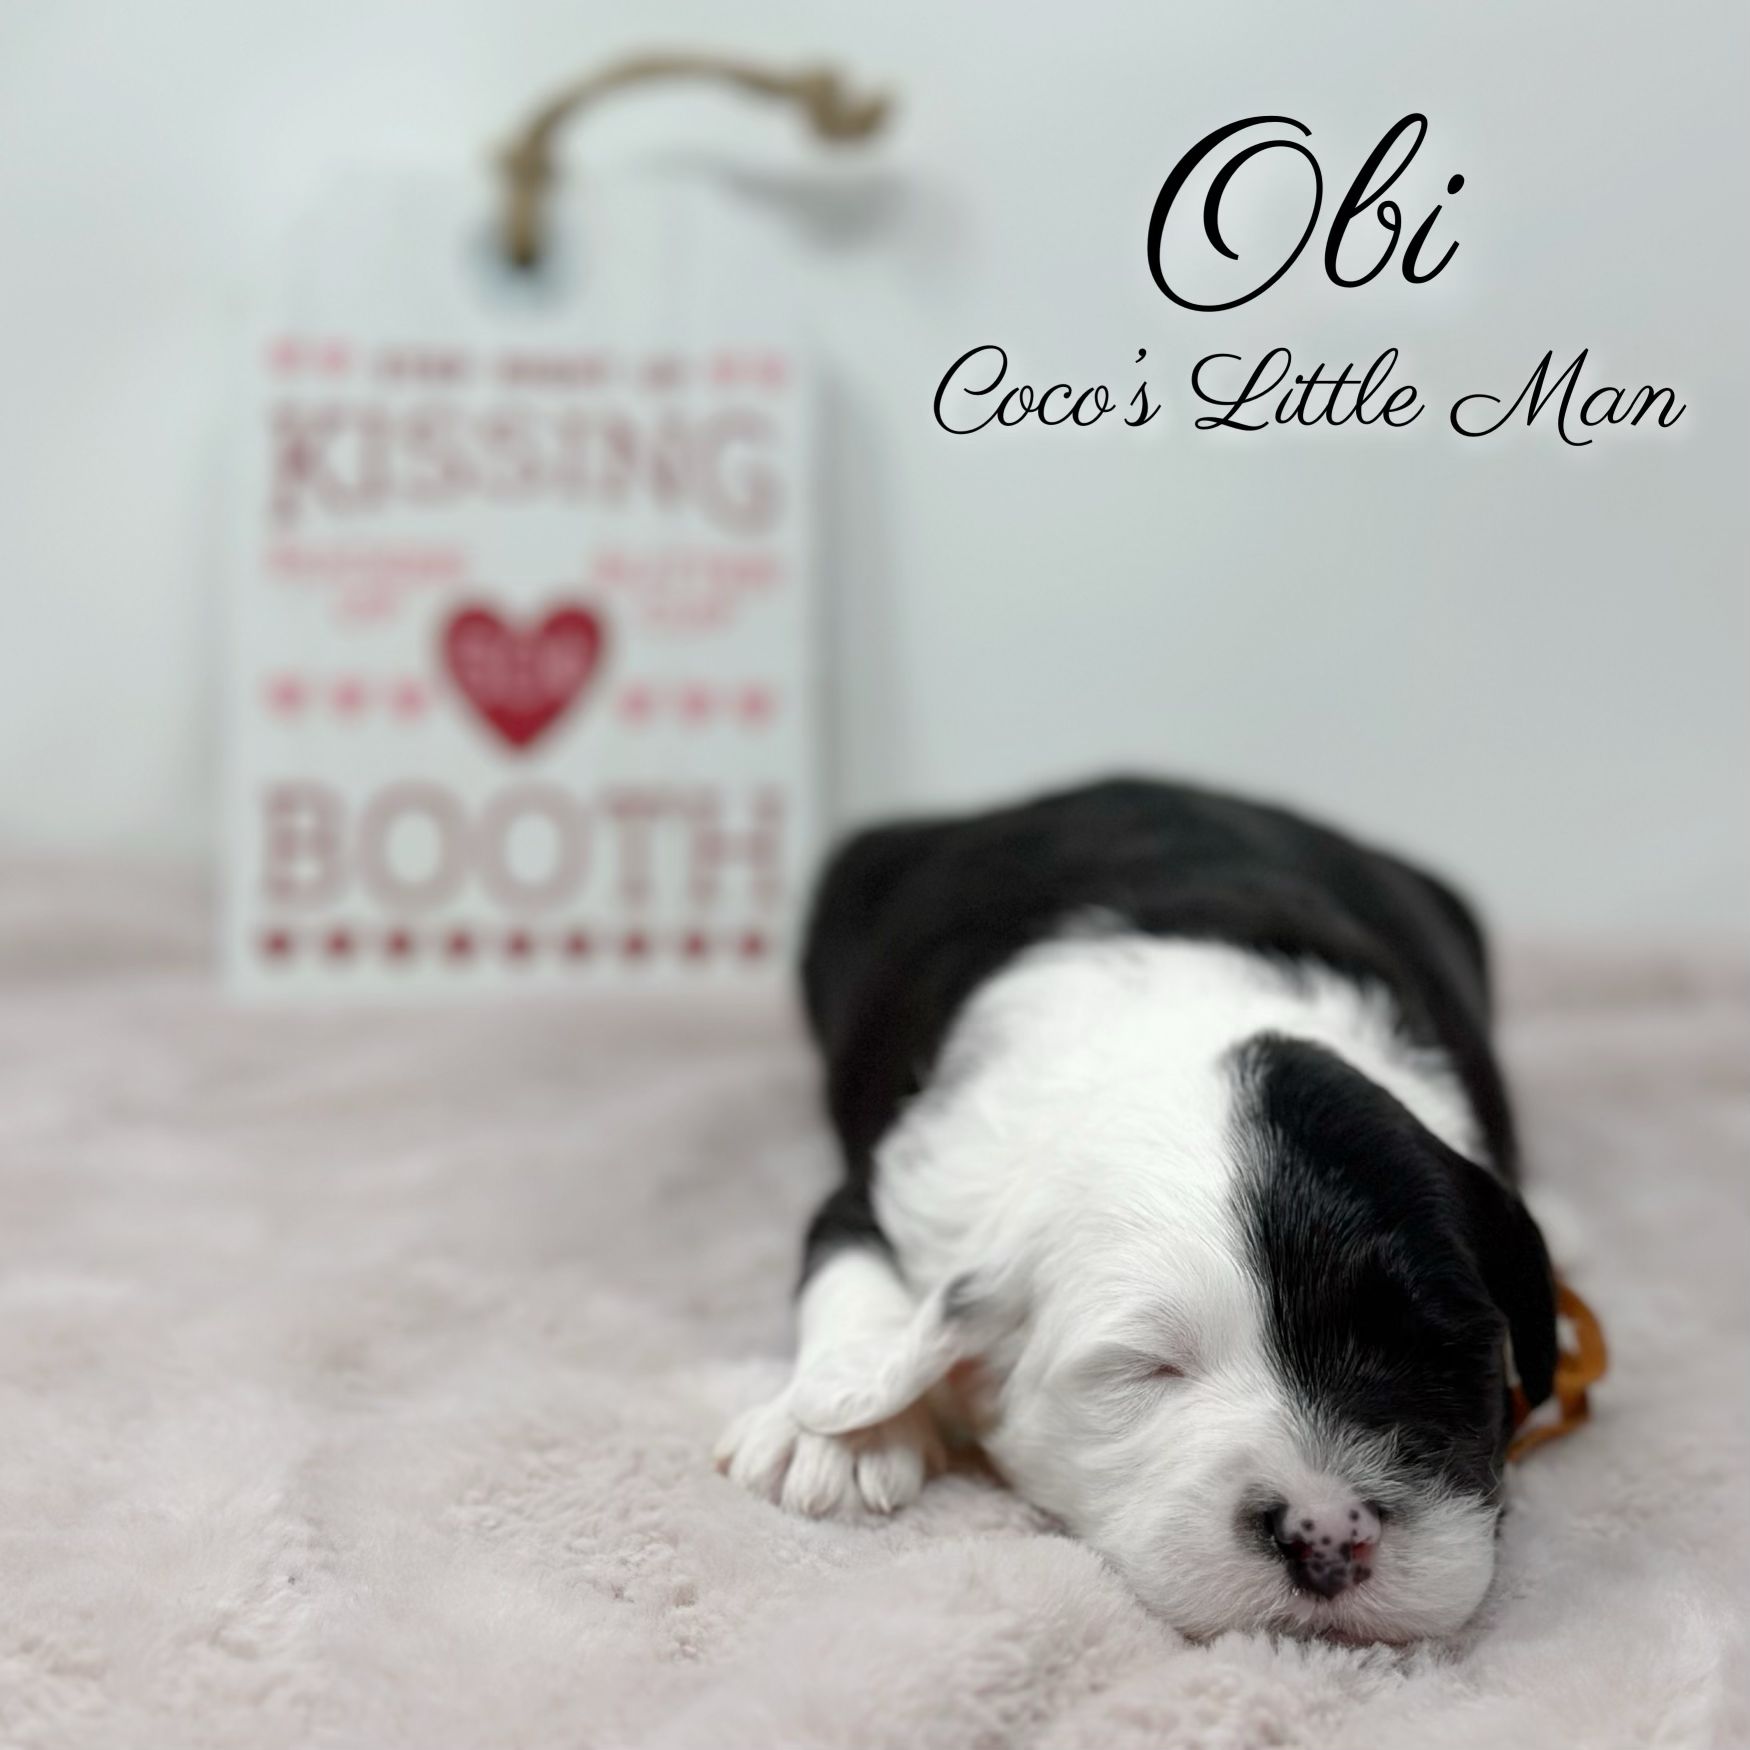 Obi Coco's Little Man